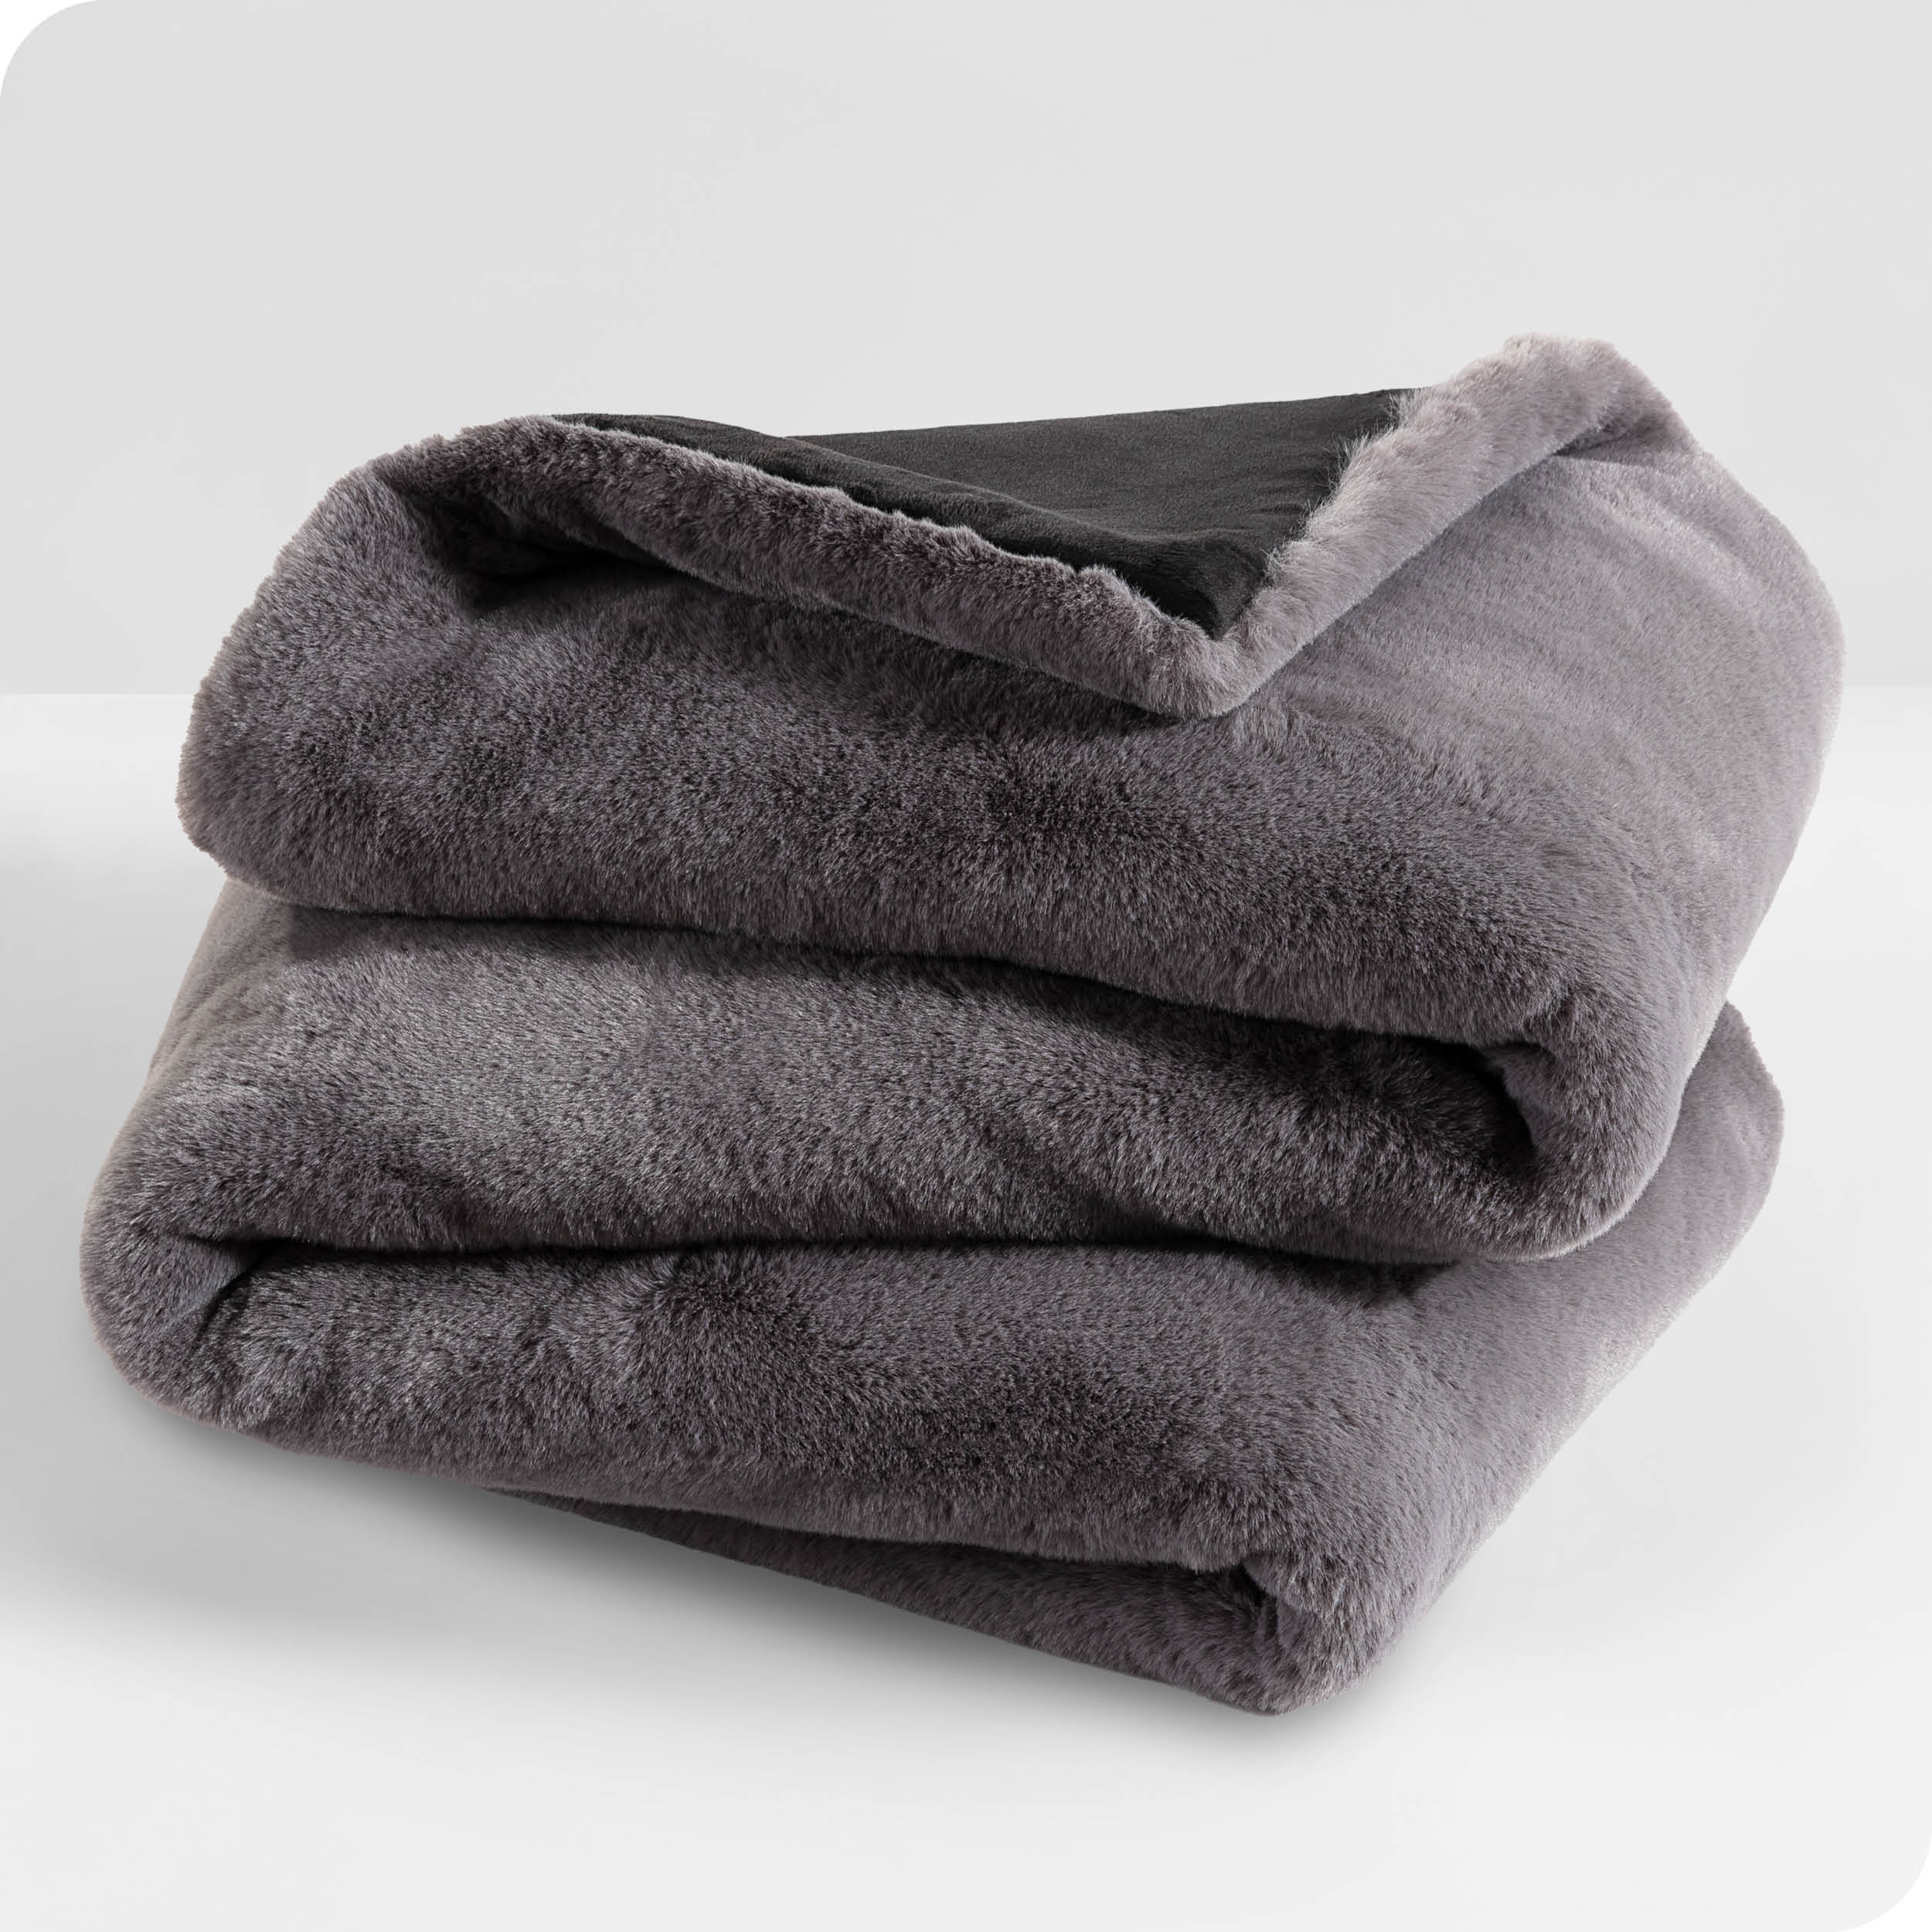 Bare Home Faux Fur Blanket - Ultra-Soft Blanket - Luxurious Fuzzy Warm Blanket - Cozy Lightweight Soft Blanket